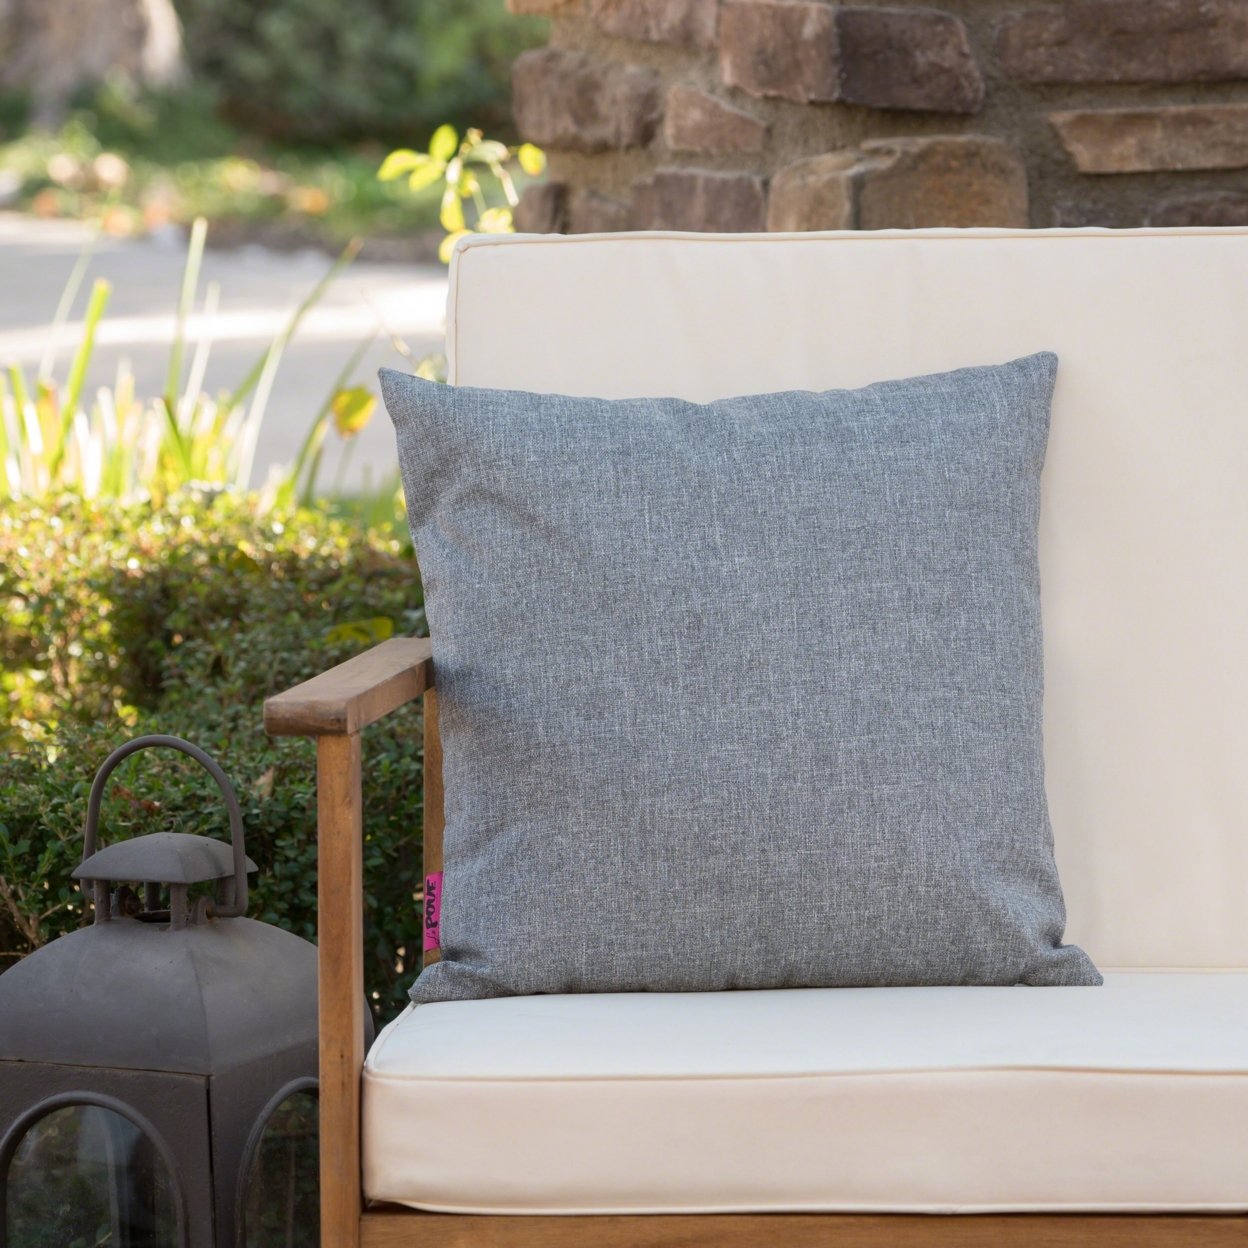 Coronado Outdoor Water Resistant Square Throw Pillow - Gray, Set Of 2